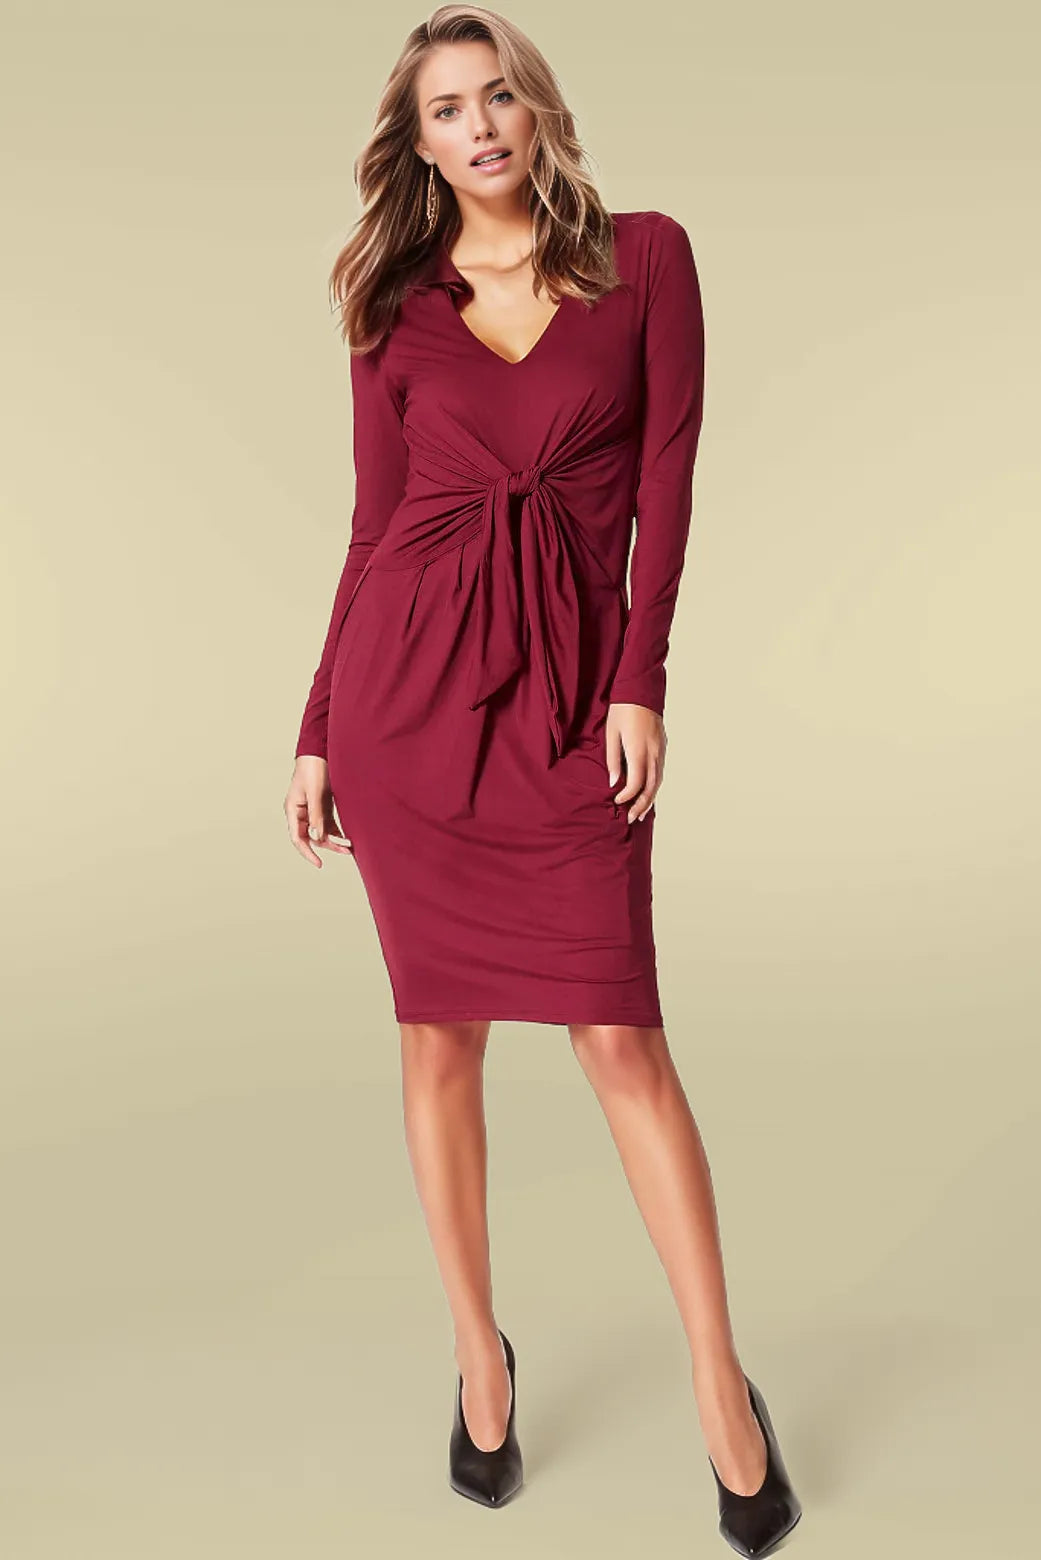 M&S Tie Front Jersey Dress Burgundy / 6